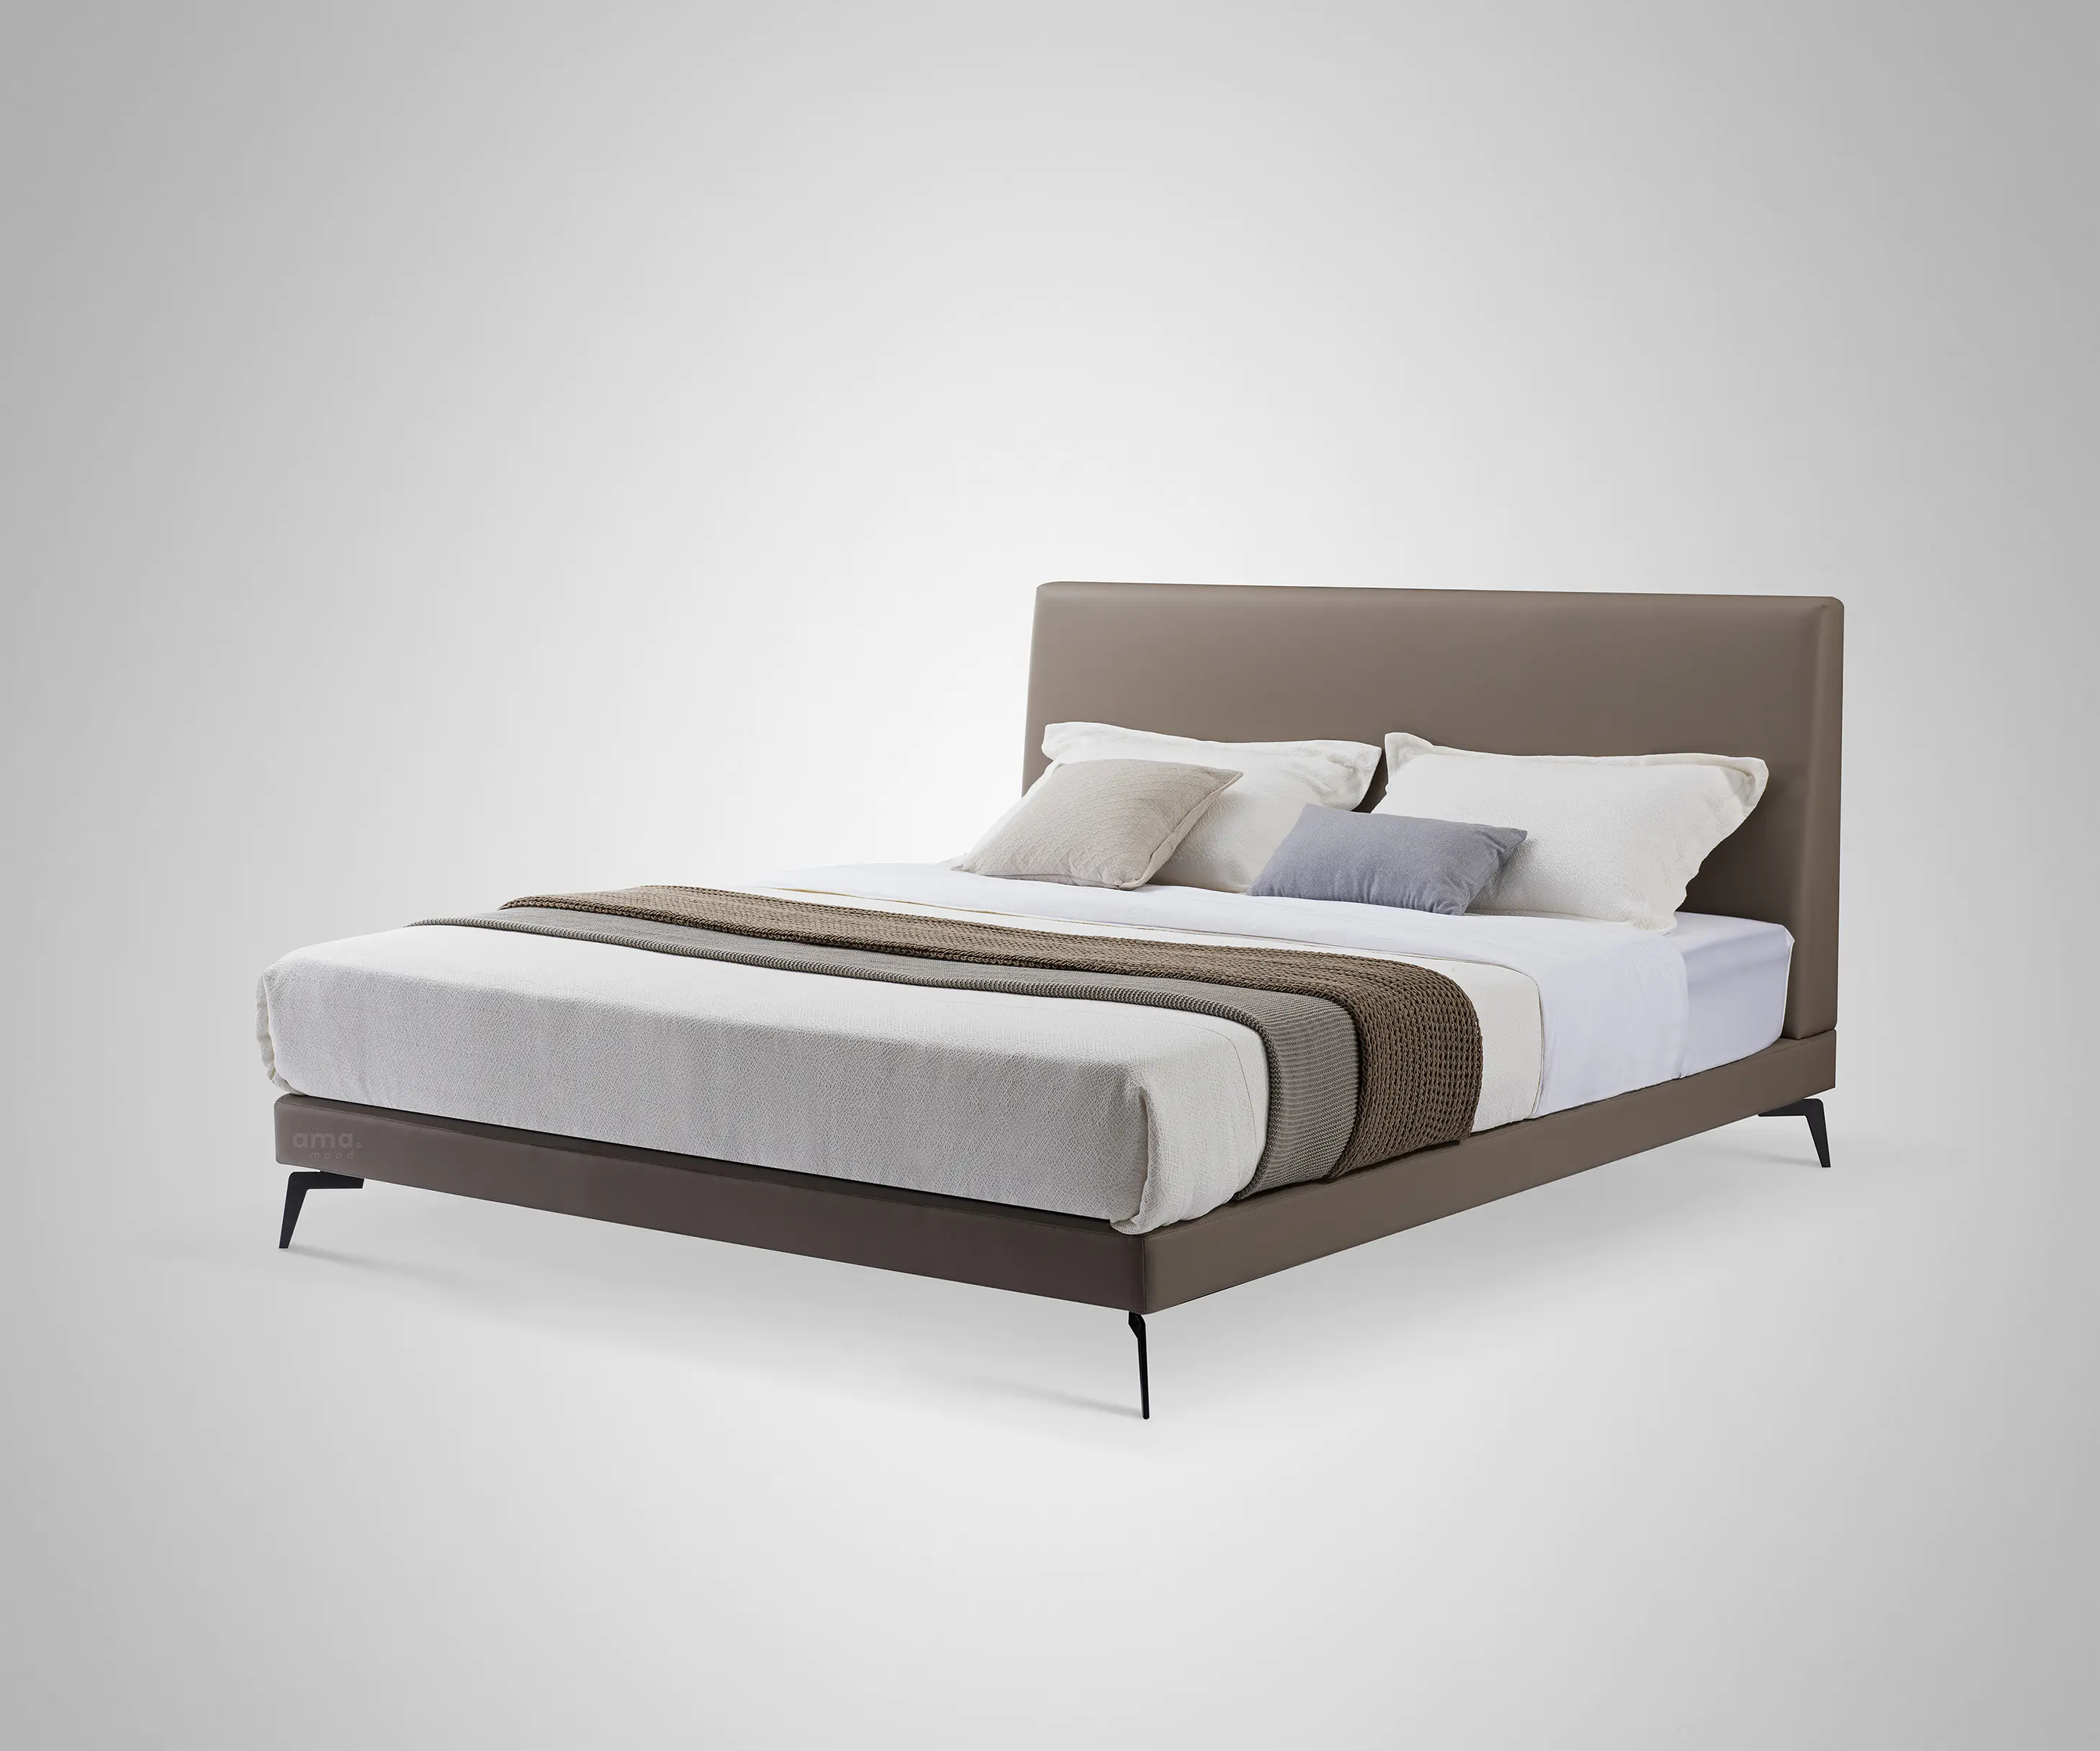 Super Promotion Bedroom Bed Classic Design